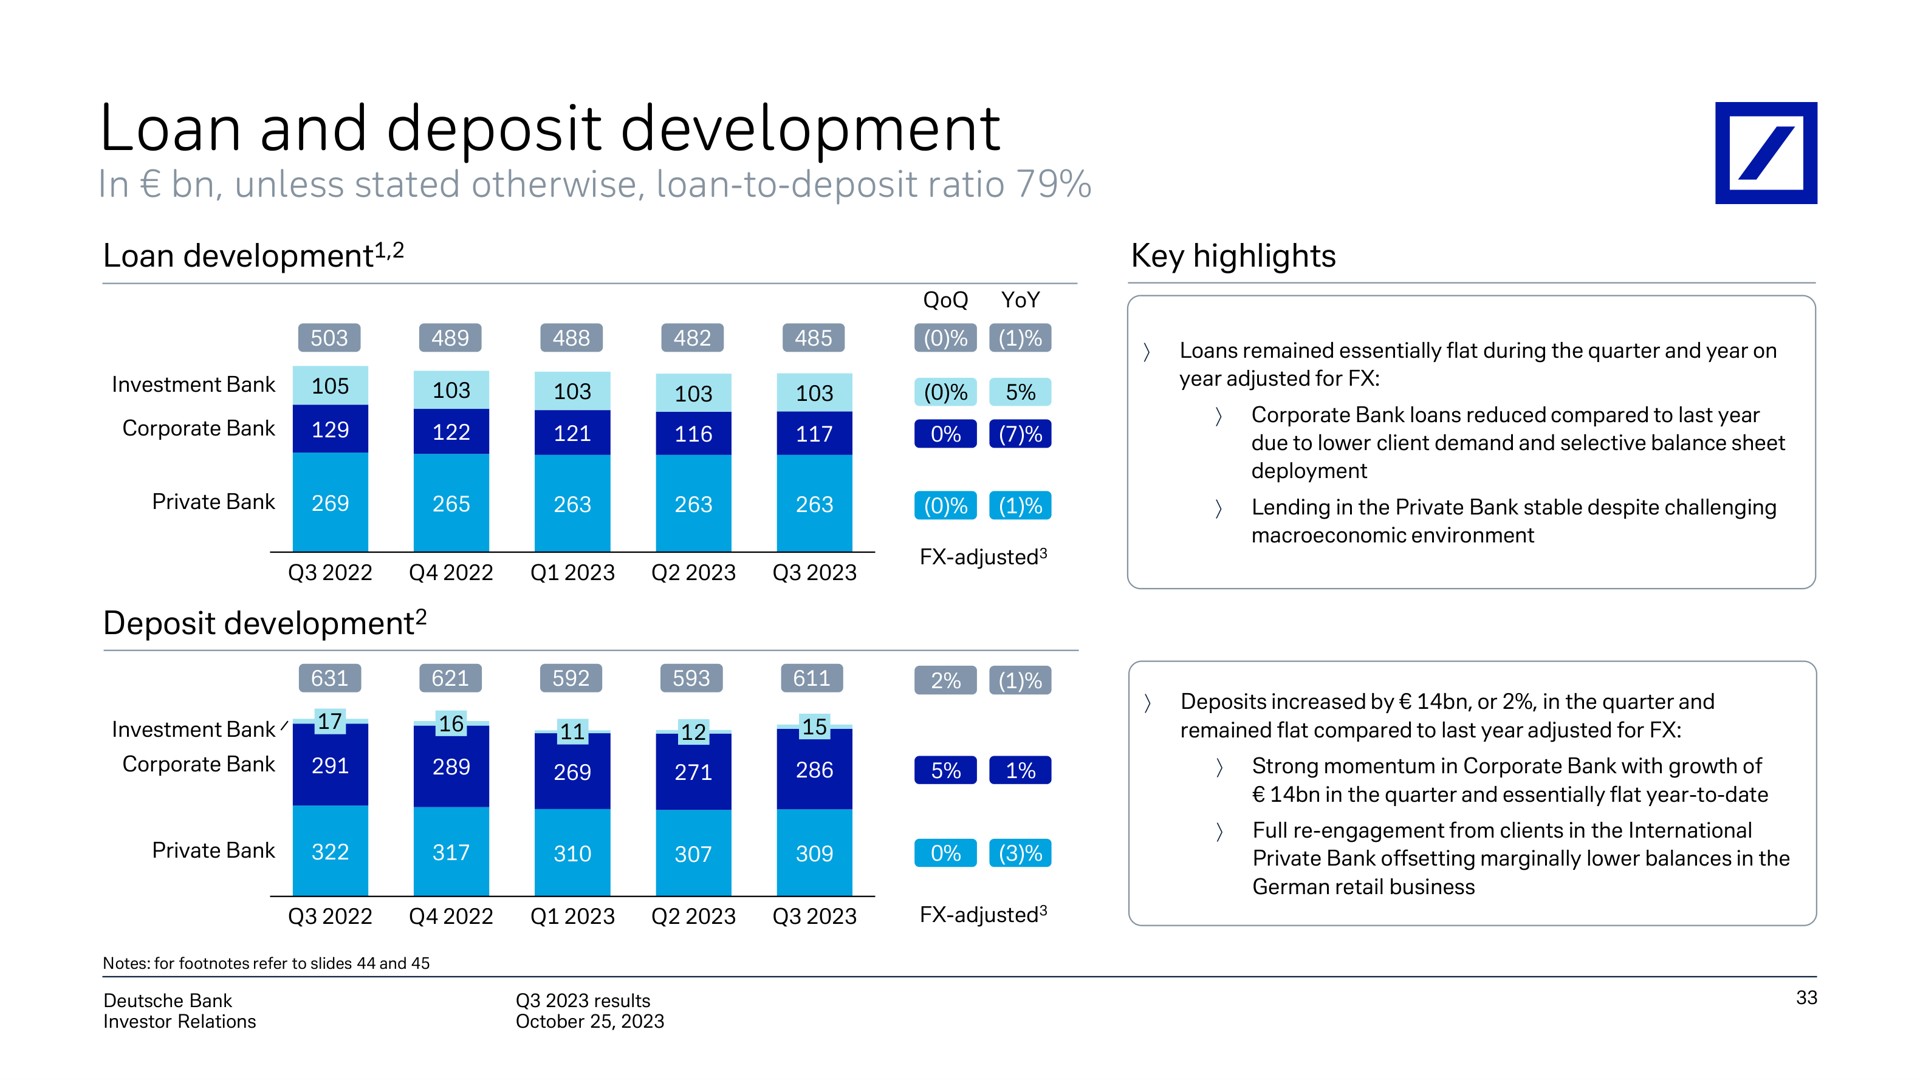 loan and deposit development | Deutsche Bank